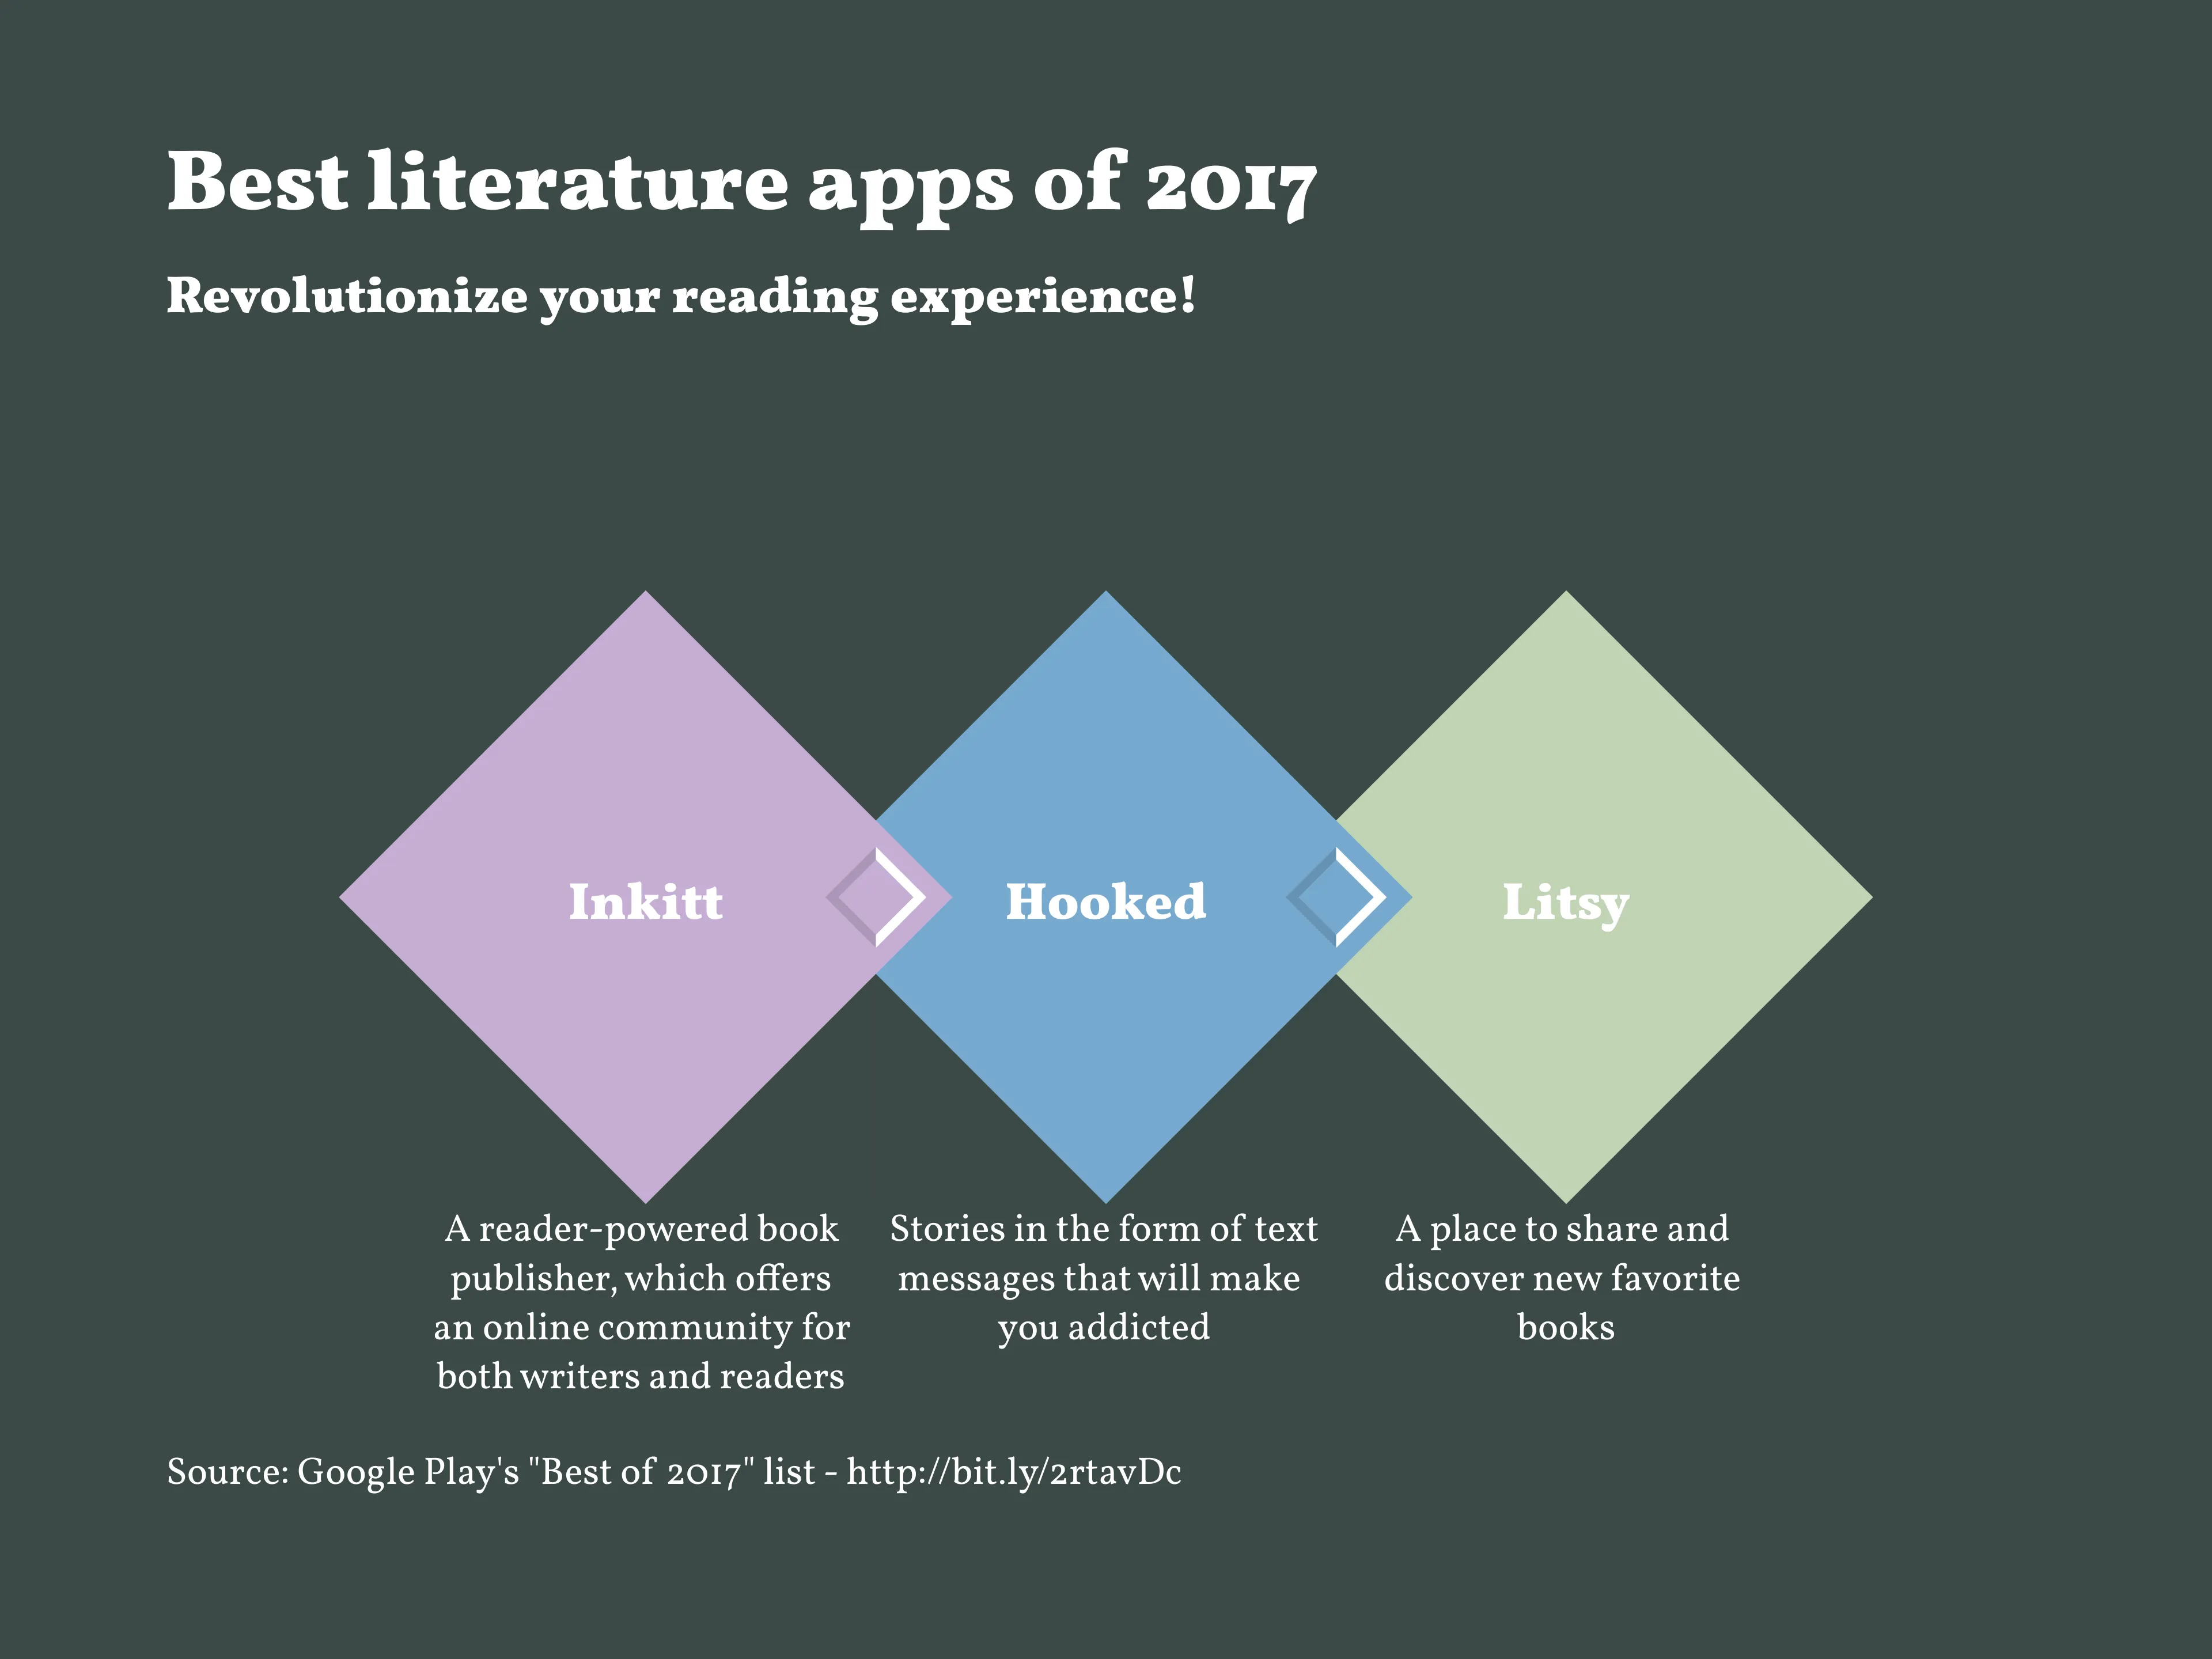 Best literature apps of 2017